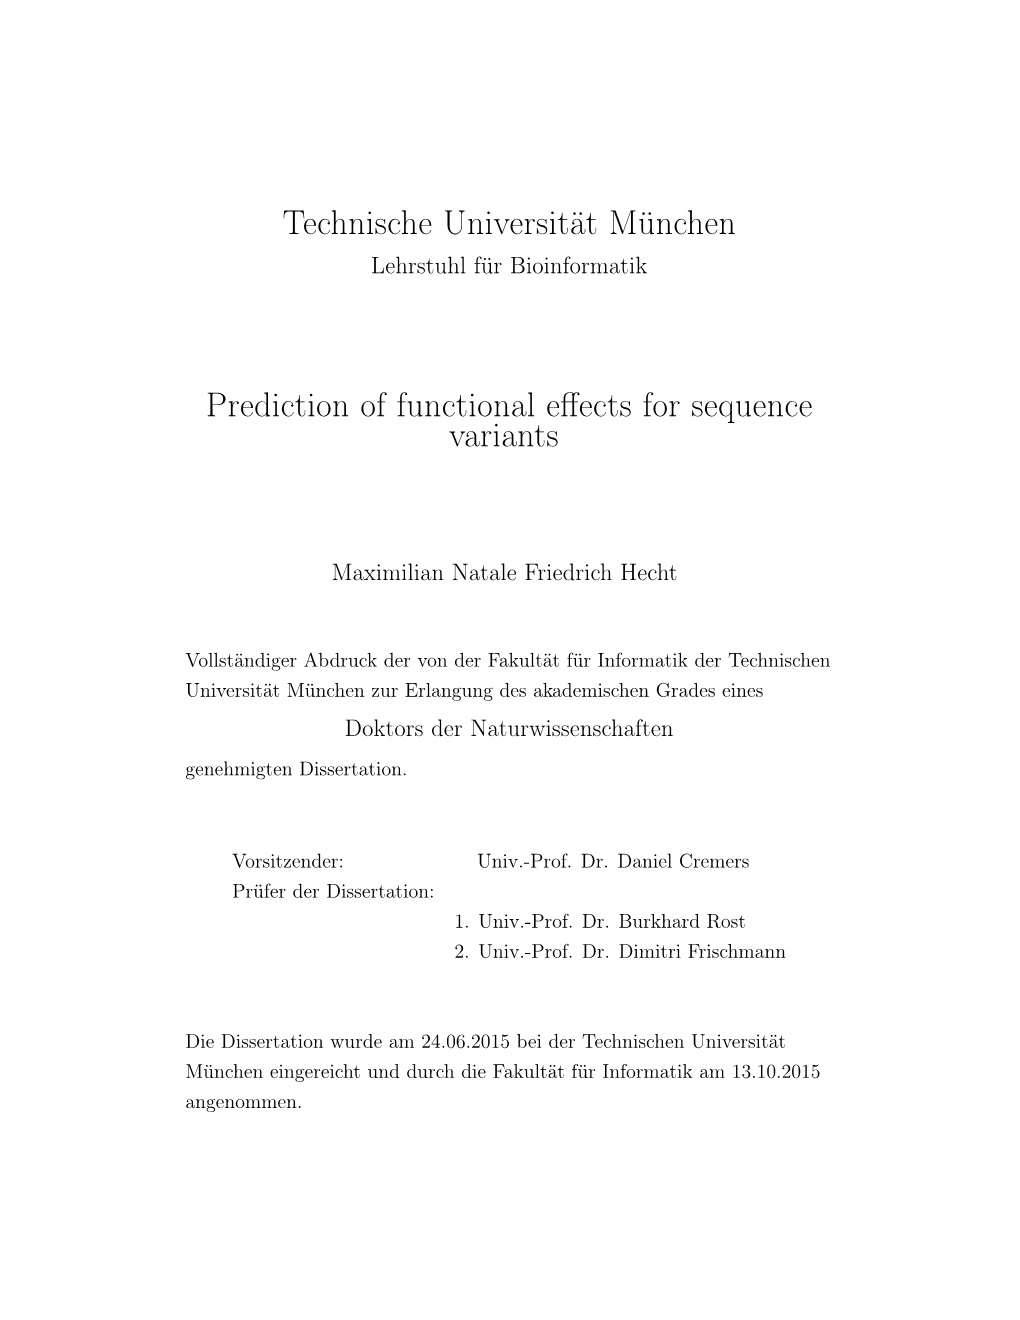 Technische Universität München Prediction of Functional Effects For